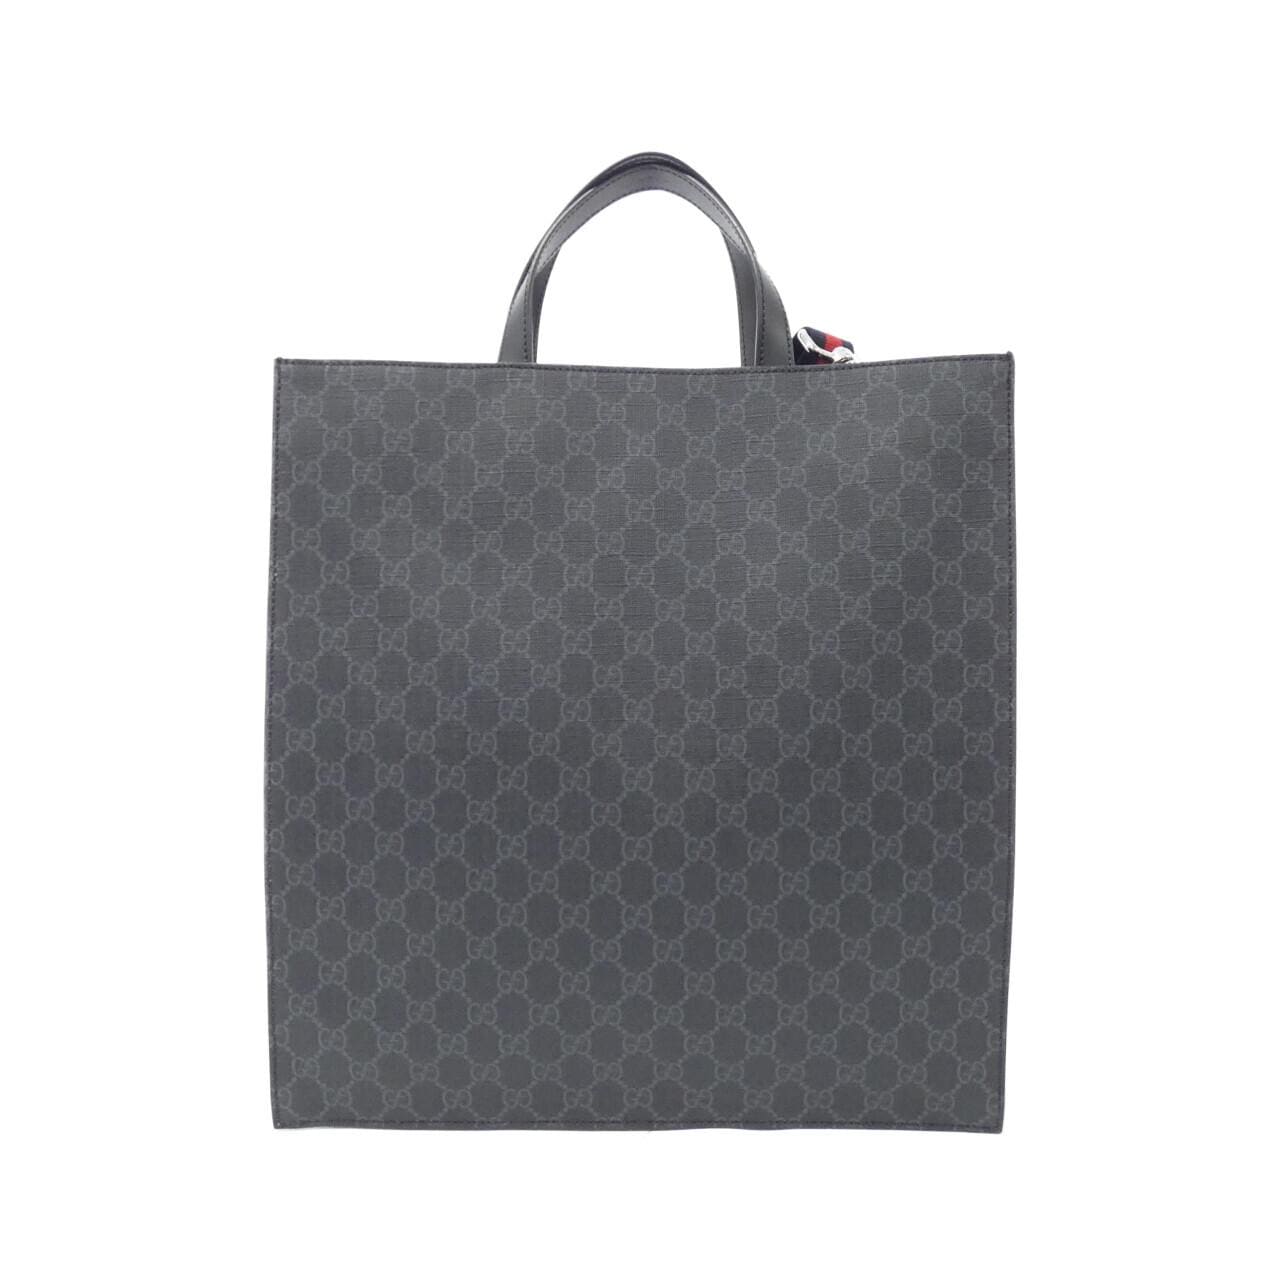 Gucci 495559 K5IAN bag